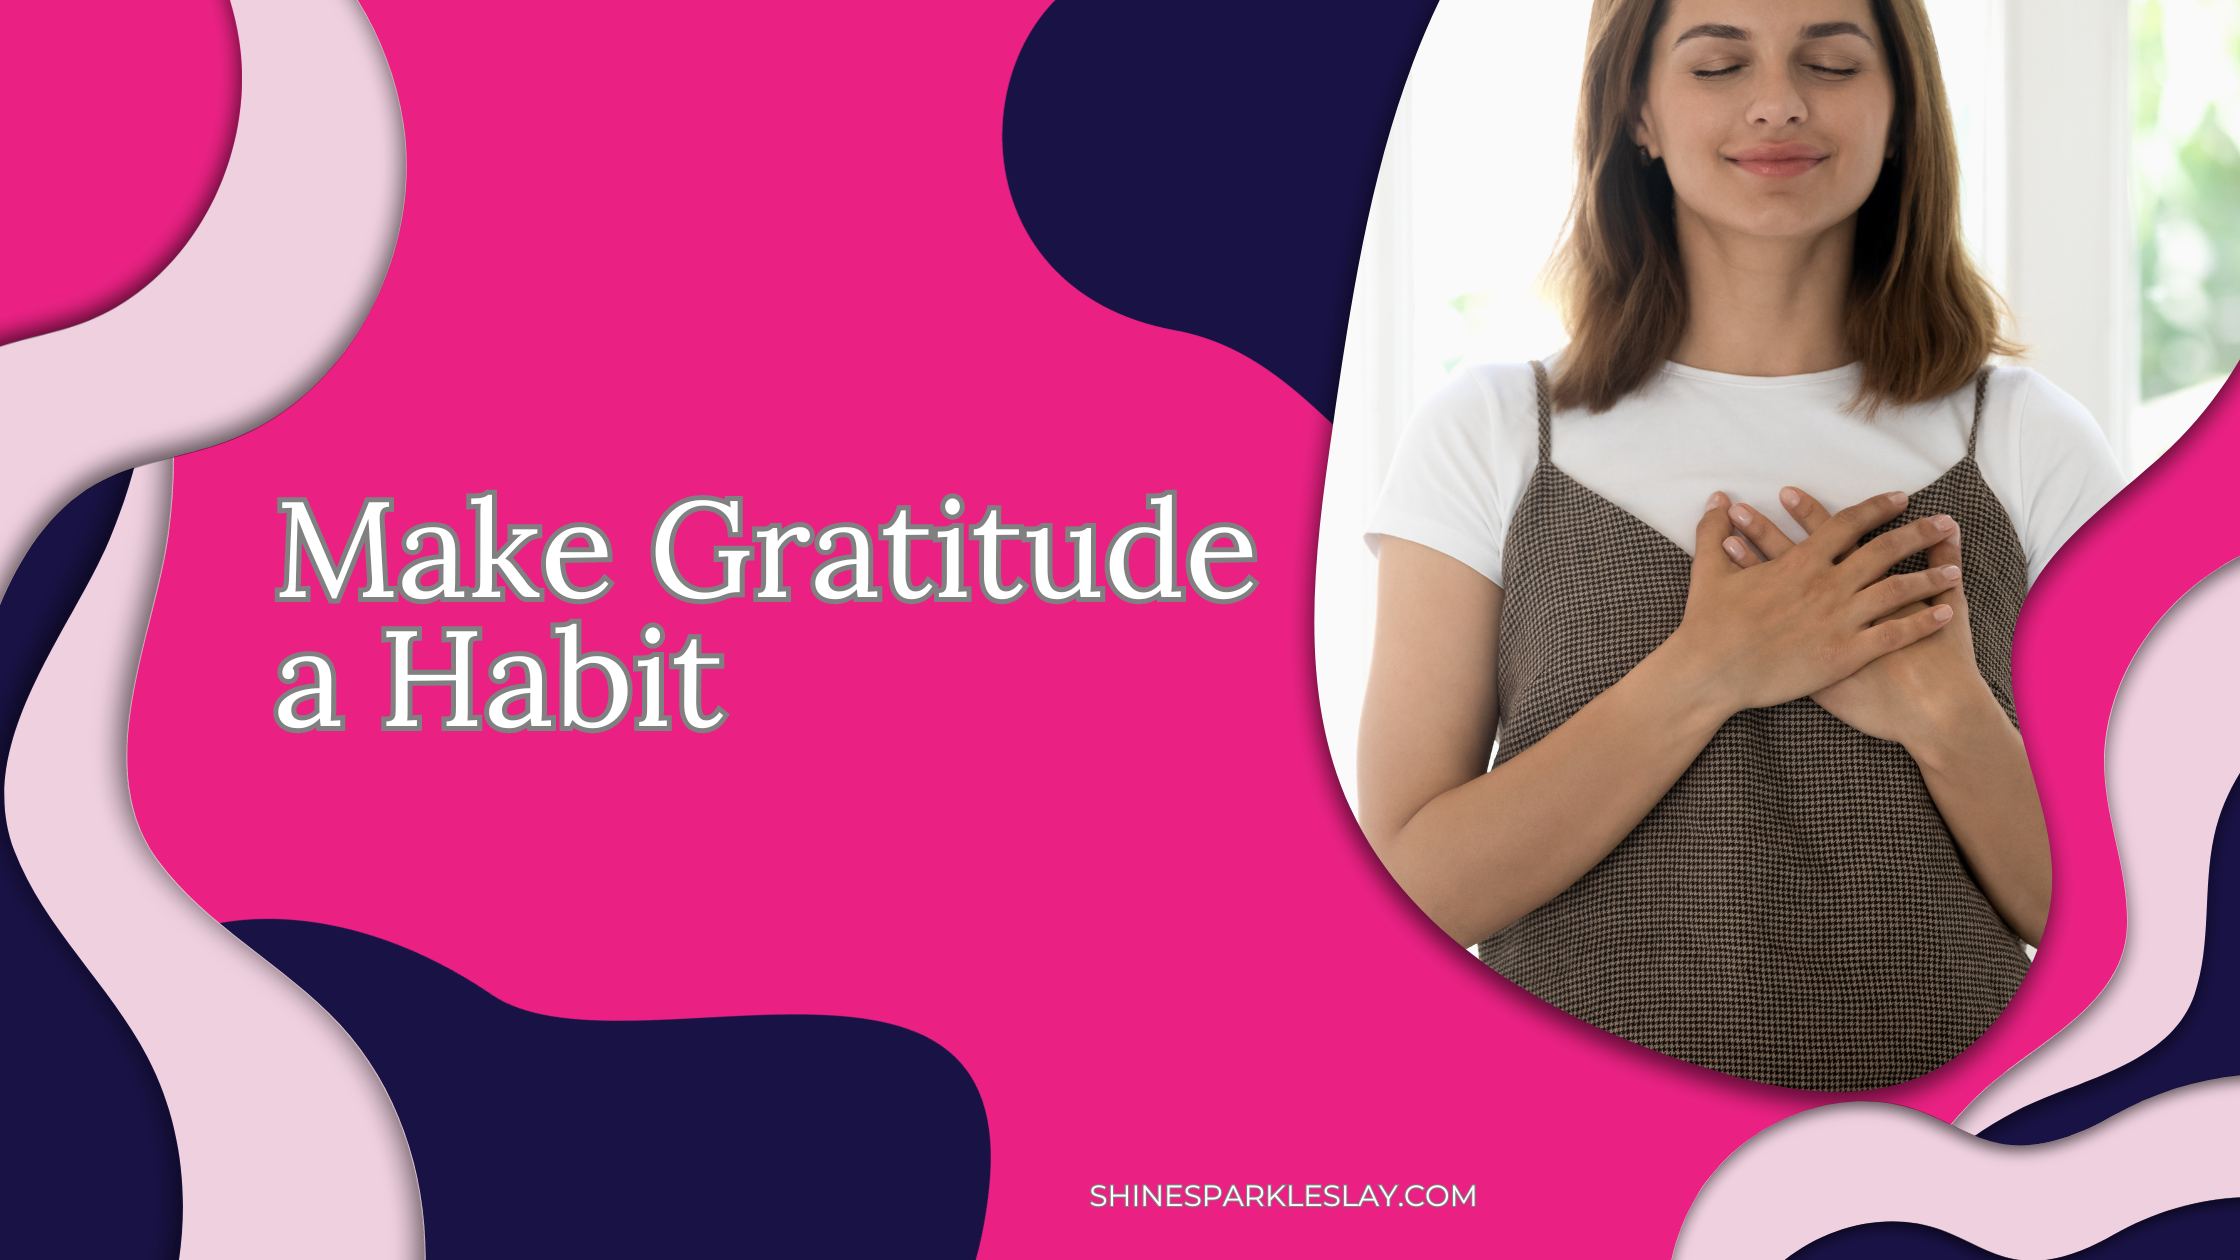 Make Gratitude a Habit